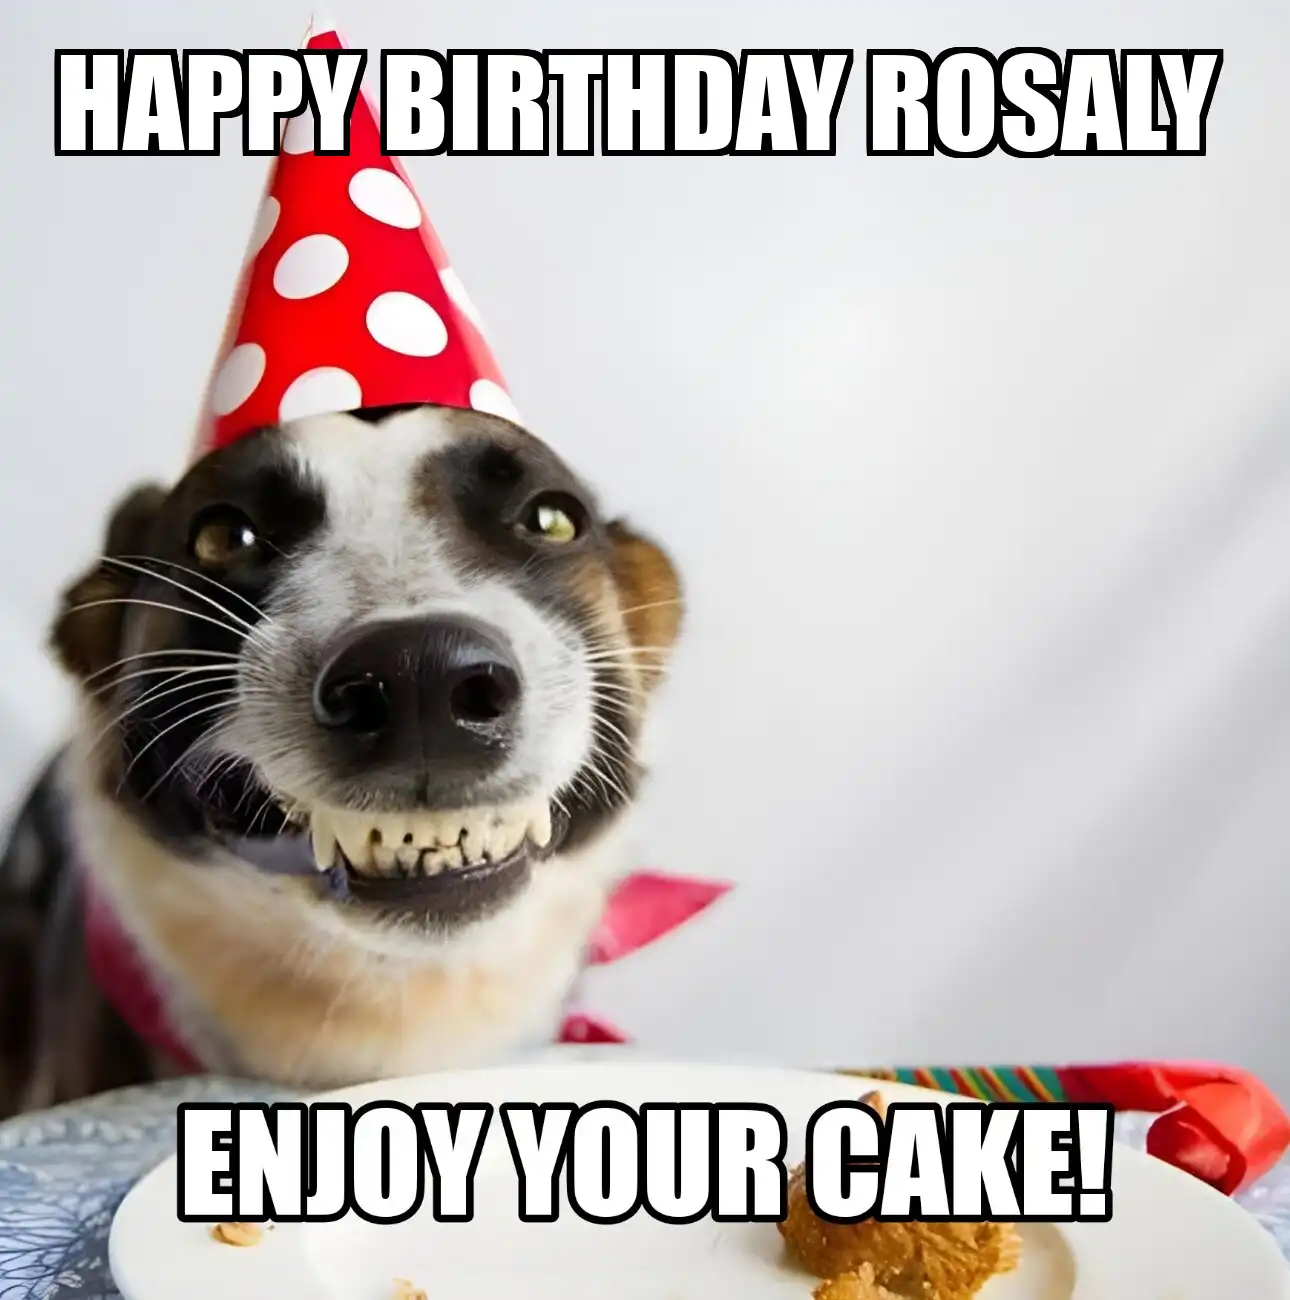 Happy Birthday Rosaly Enjoy Your Cake Dog Meme